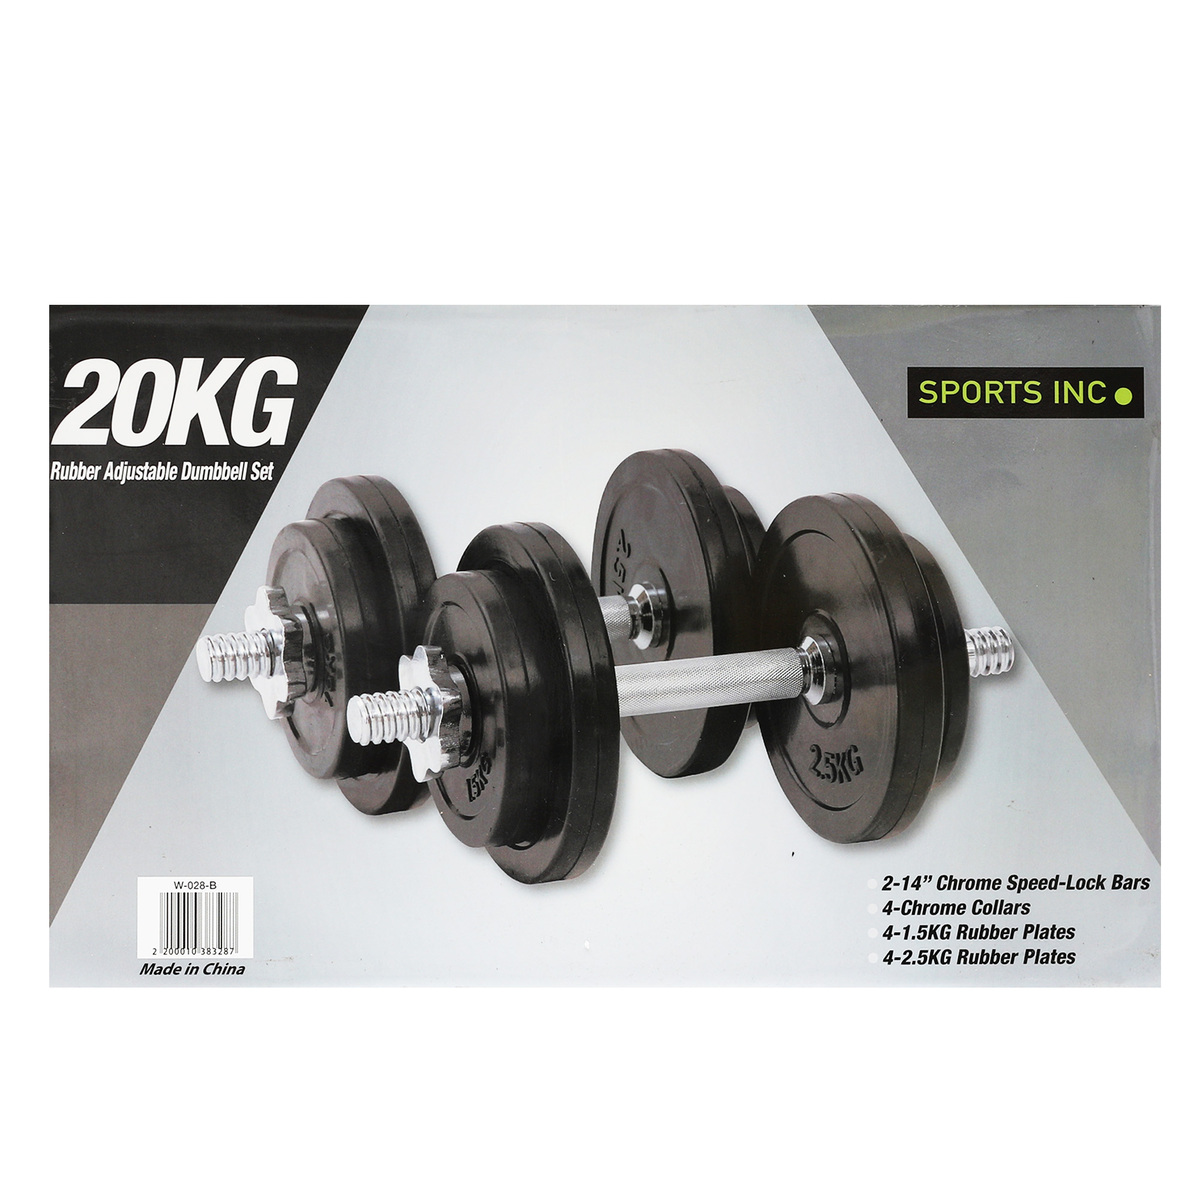 Sports INC Dumbbell Set W-028-B 20kg